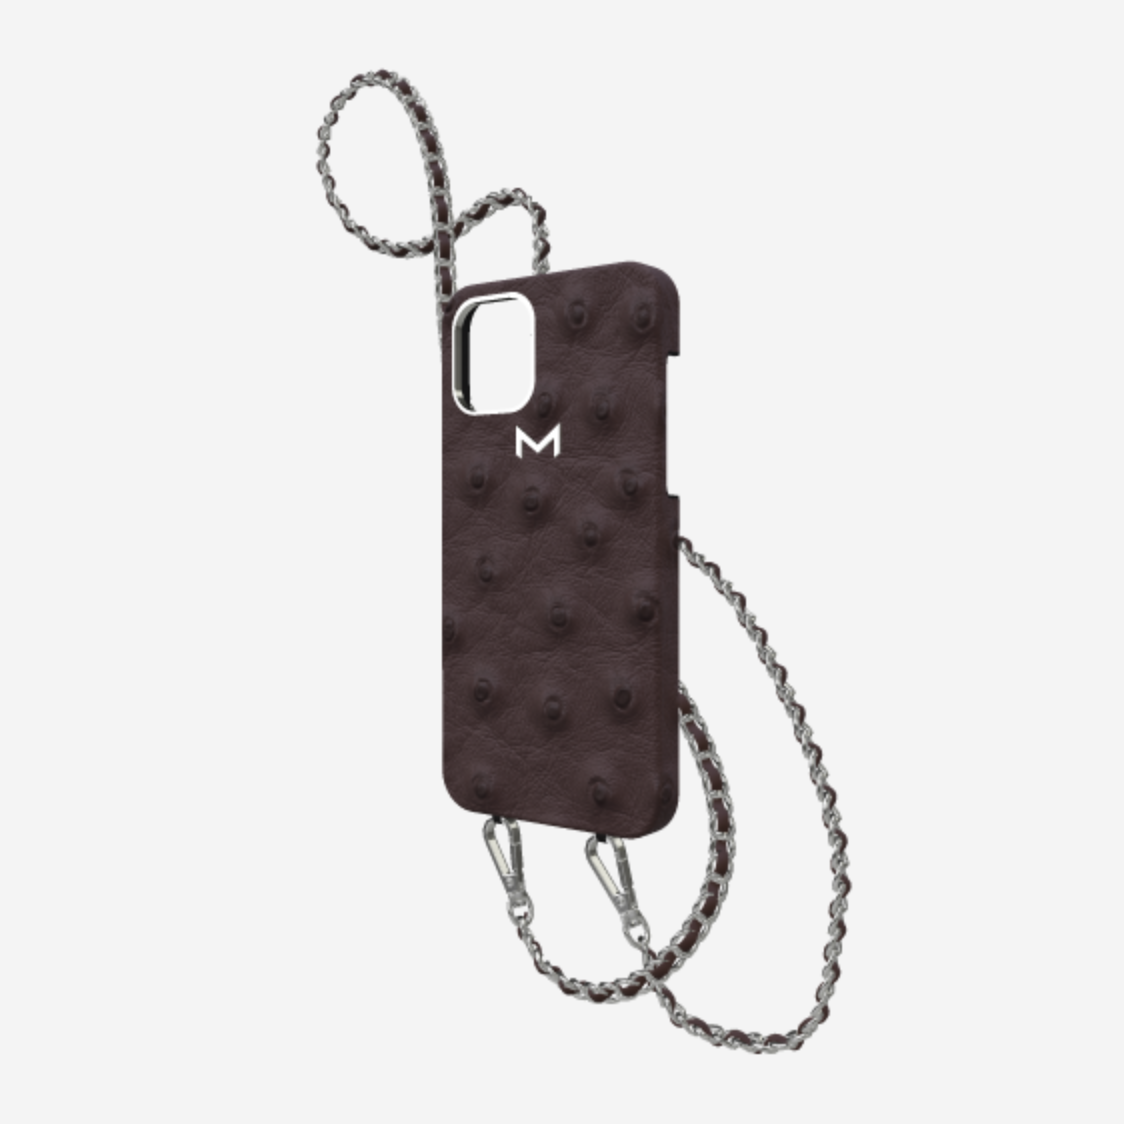 iphone 11 /pro /max case chain iphone 11 case louis vuitton cover